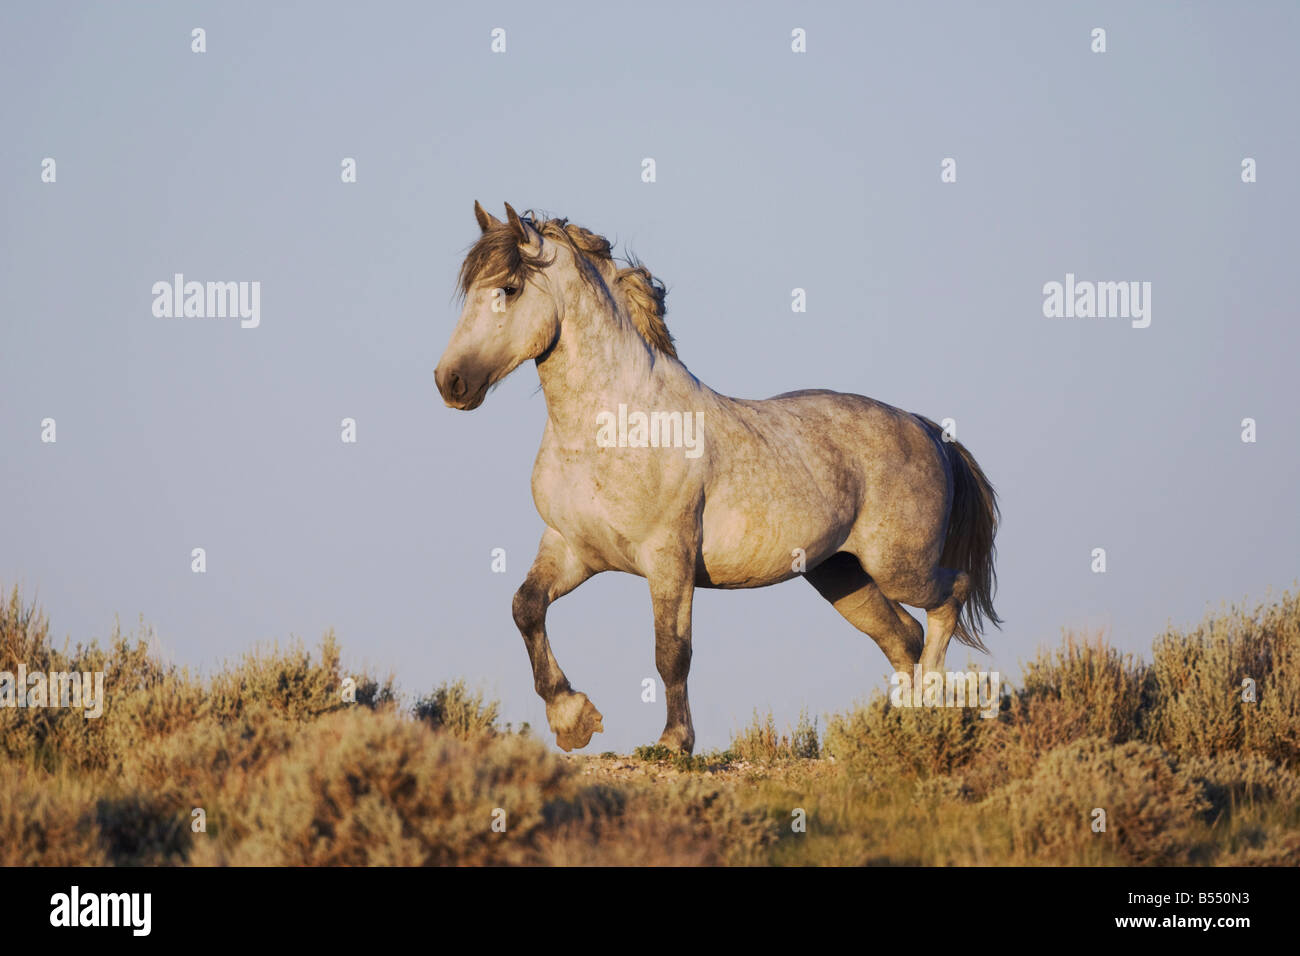 Mustang Horse Equus caballus adult Pryor Mountain Wild Horse Range Montana USA Stock Photo